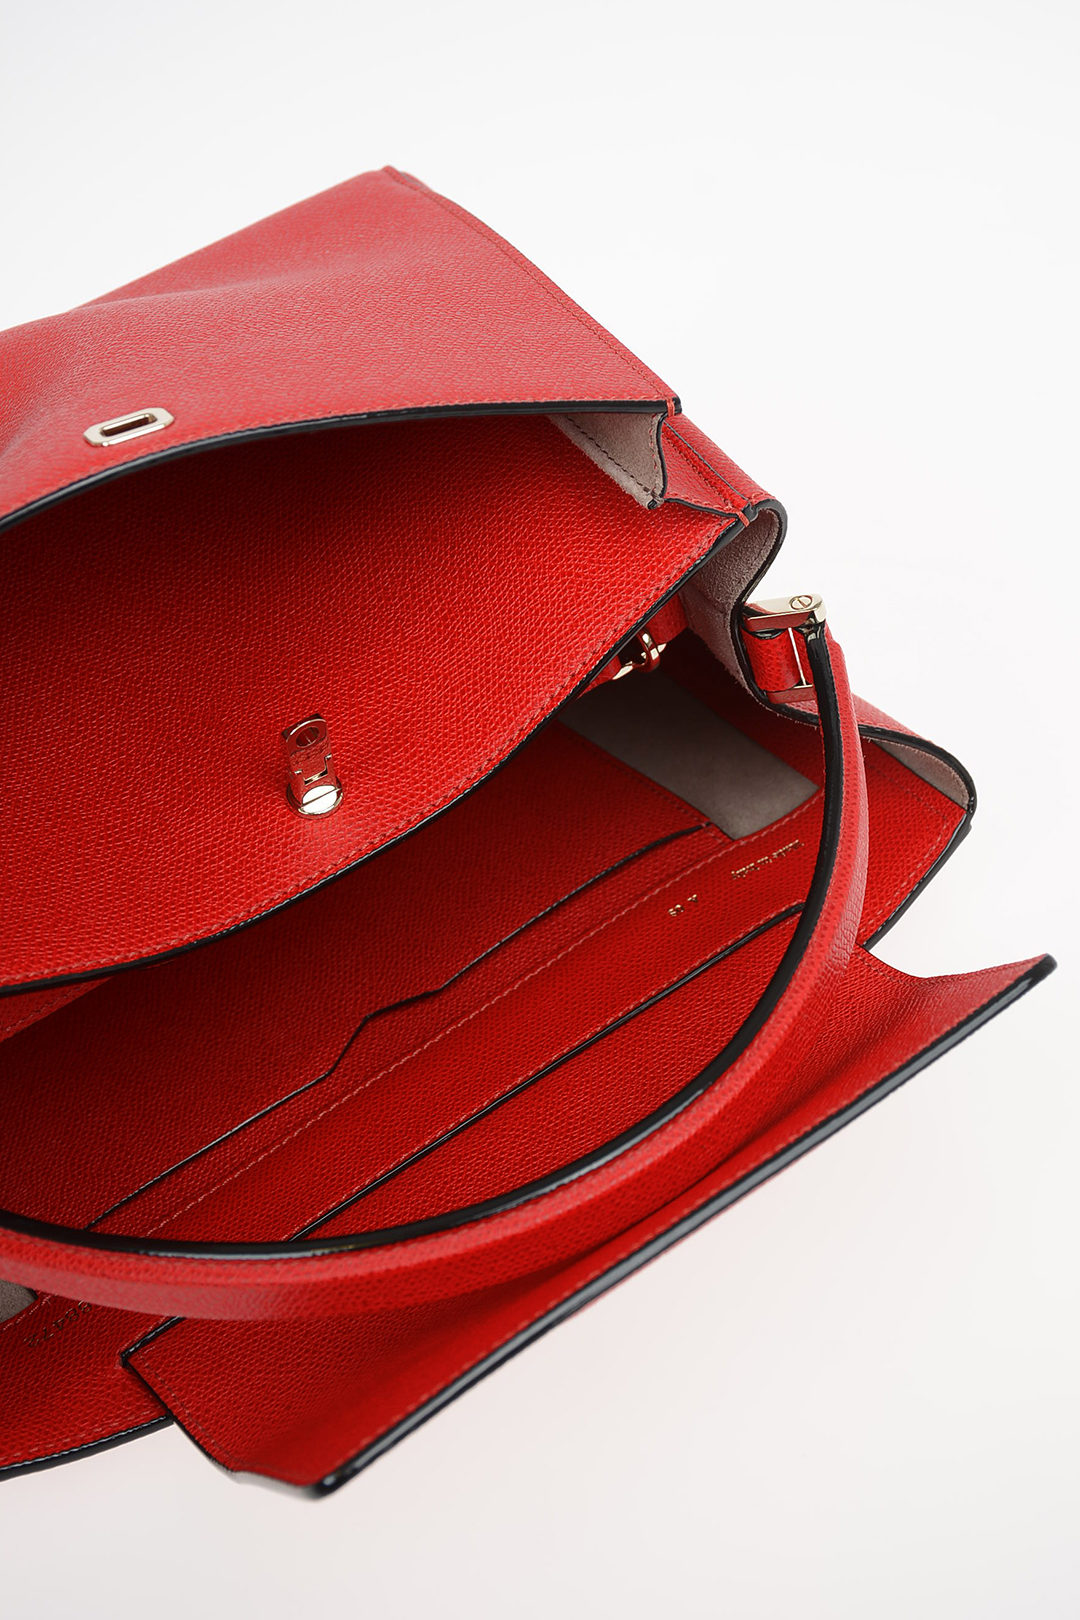 VBH Leather Brera 34 Bag - Red Handle Bags, Handbags - VBH20895